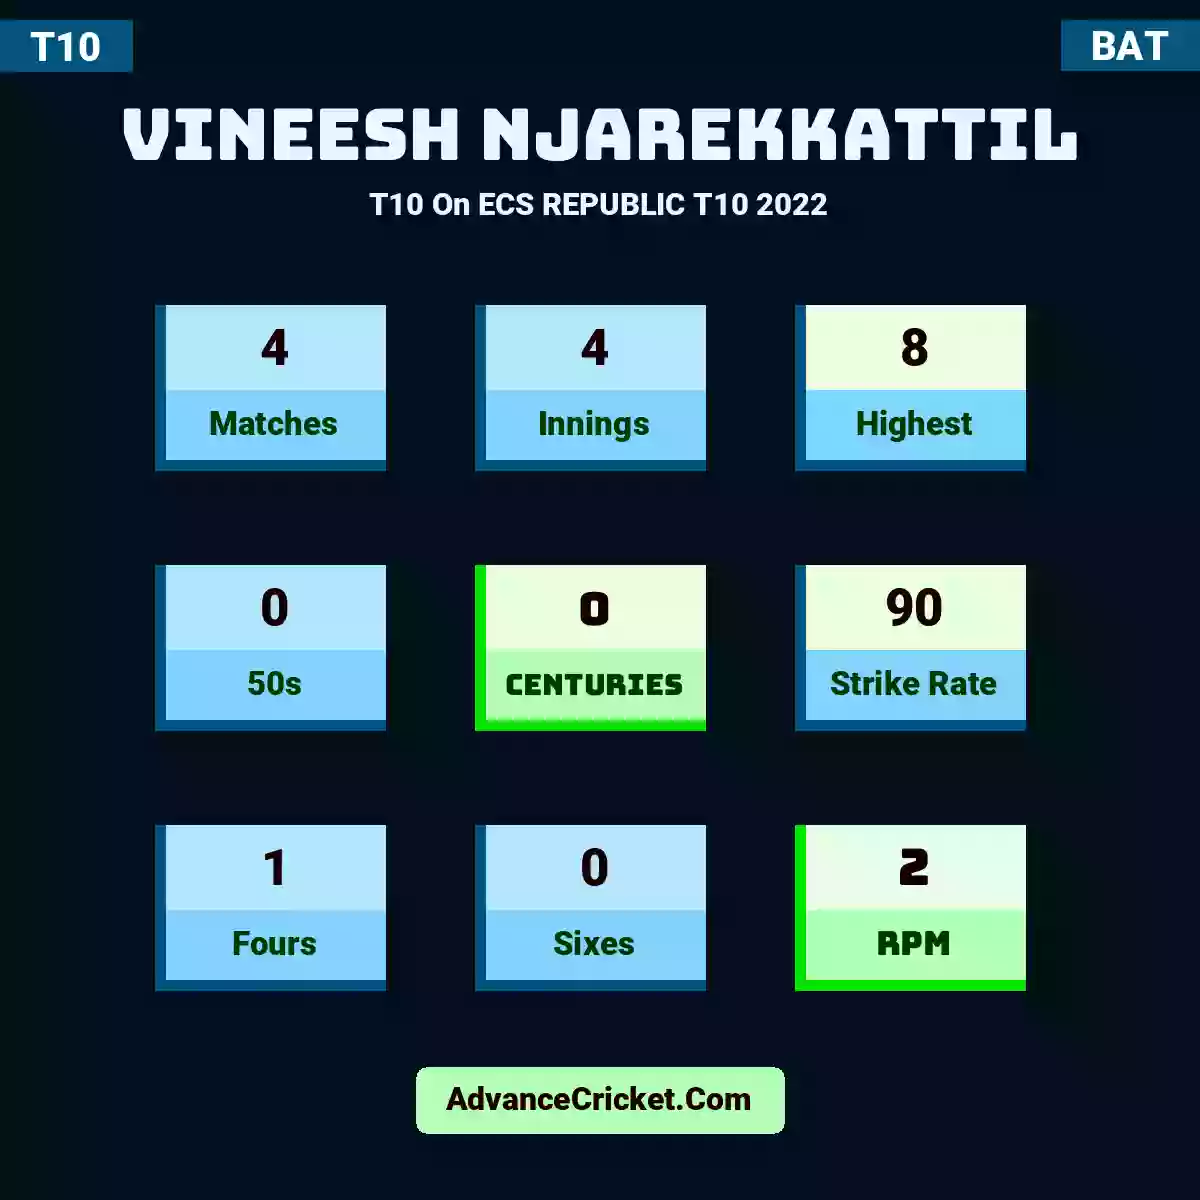 Vineesh Njarekkattil T10  On ECS REPUBLIC T10 2022, Vineesh Njarekkattil played 4 matches, scored 8 runs as highest, 0 half-centuries, and 0 centuries, with a strike rate of 90. V.Njarekkattil hit 1 fours and 0 sixes, with an RPM of 2.